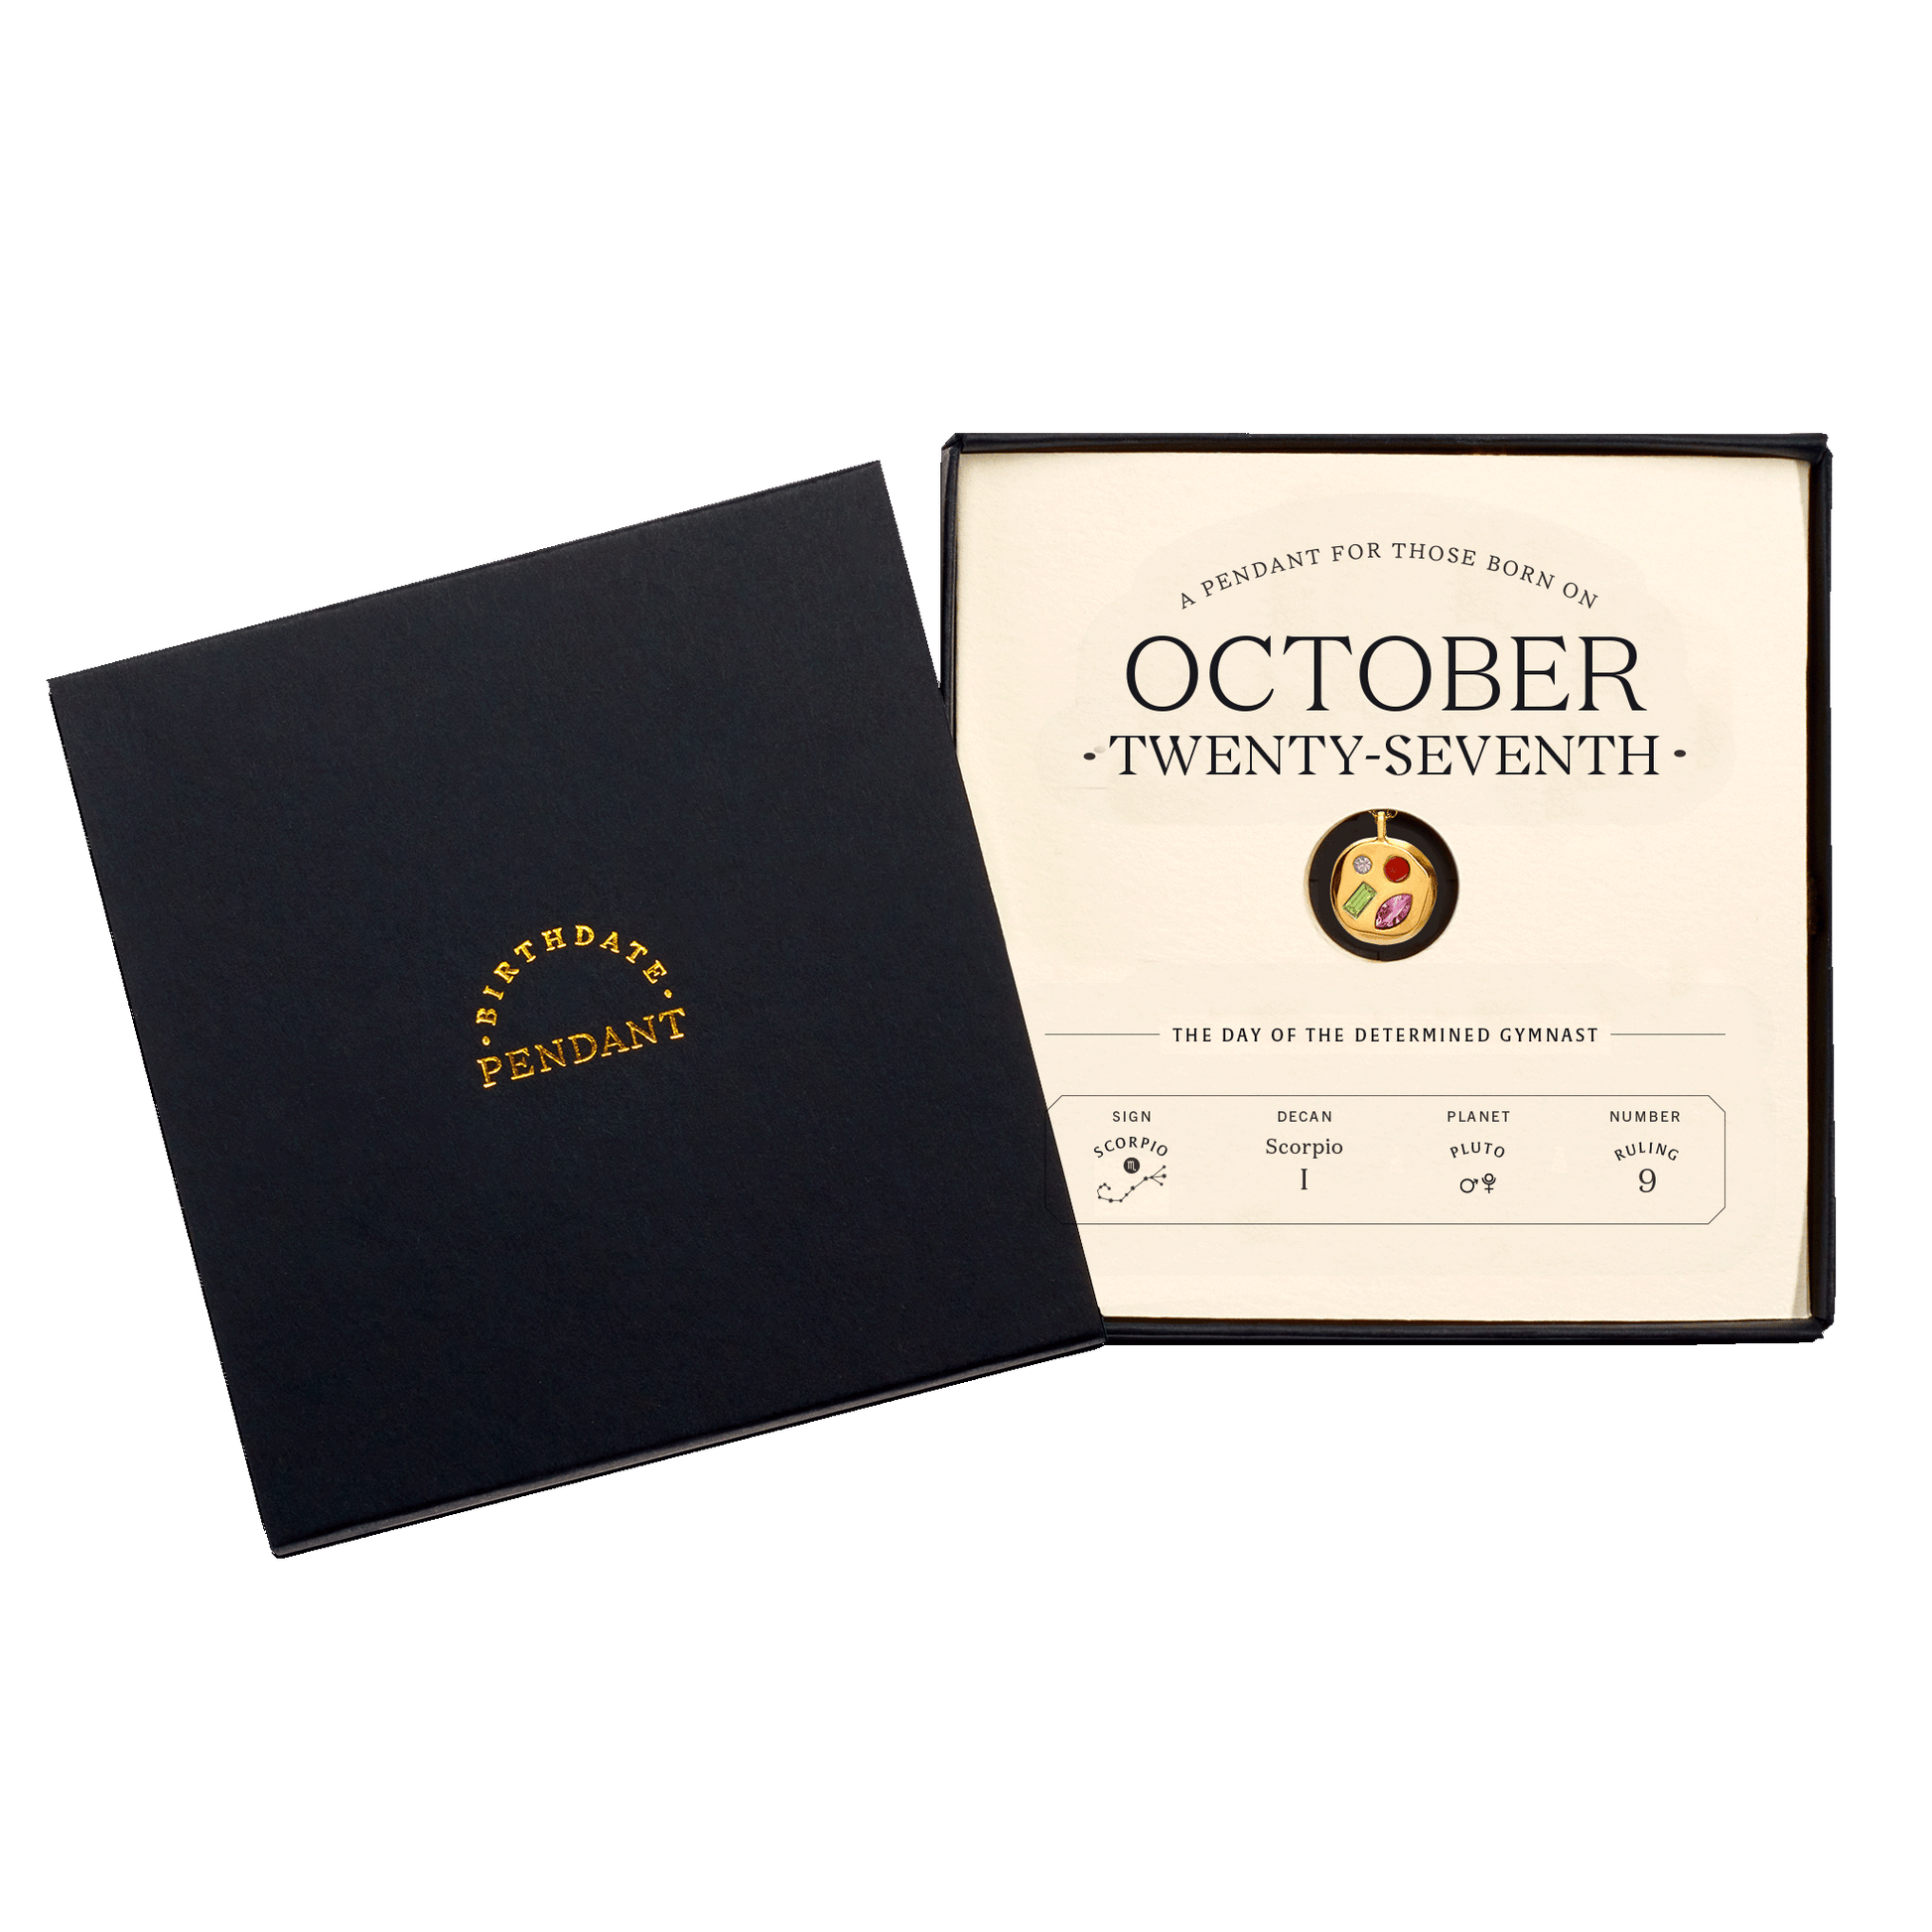 The October Twenty-Seventh Pendant inside its box